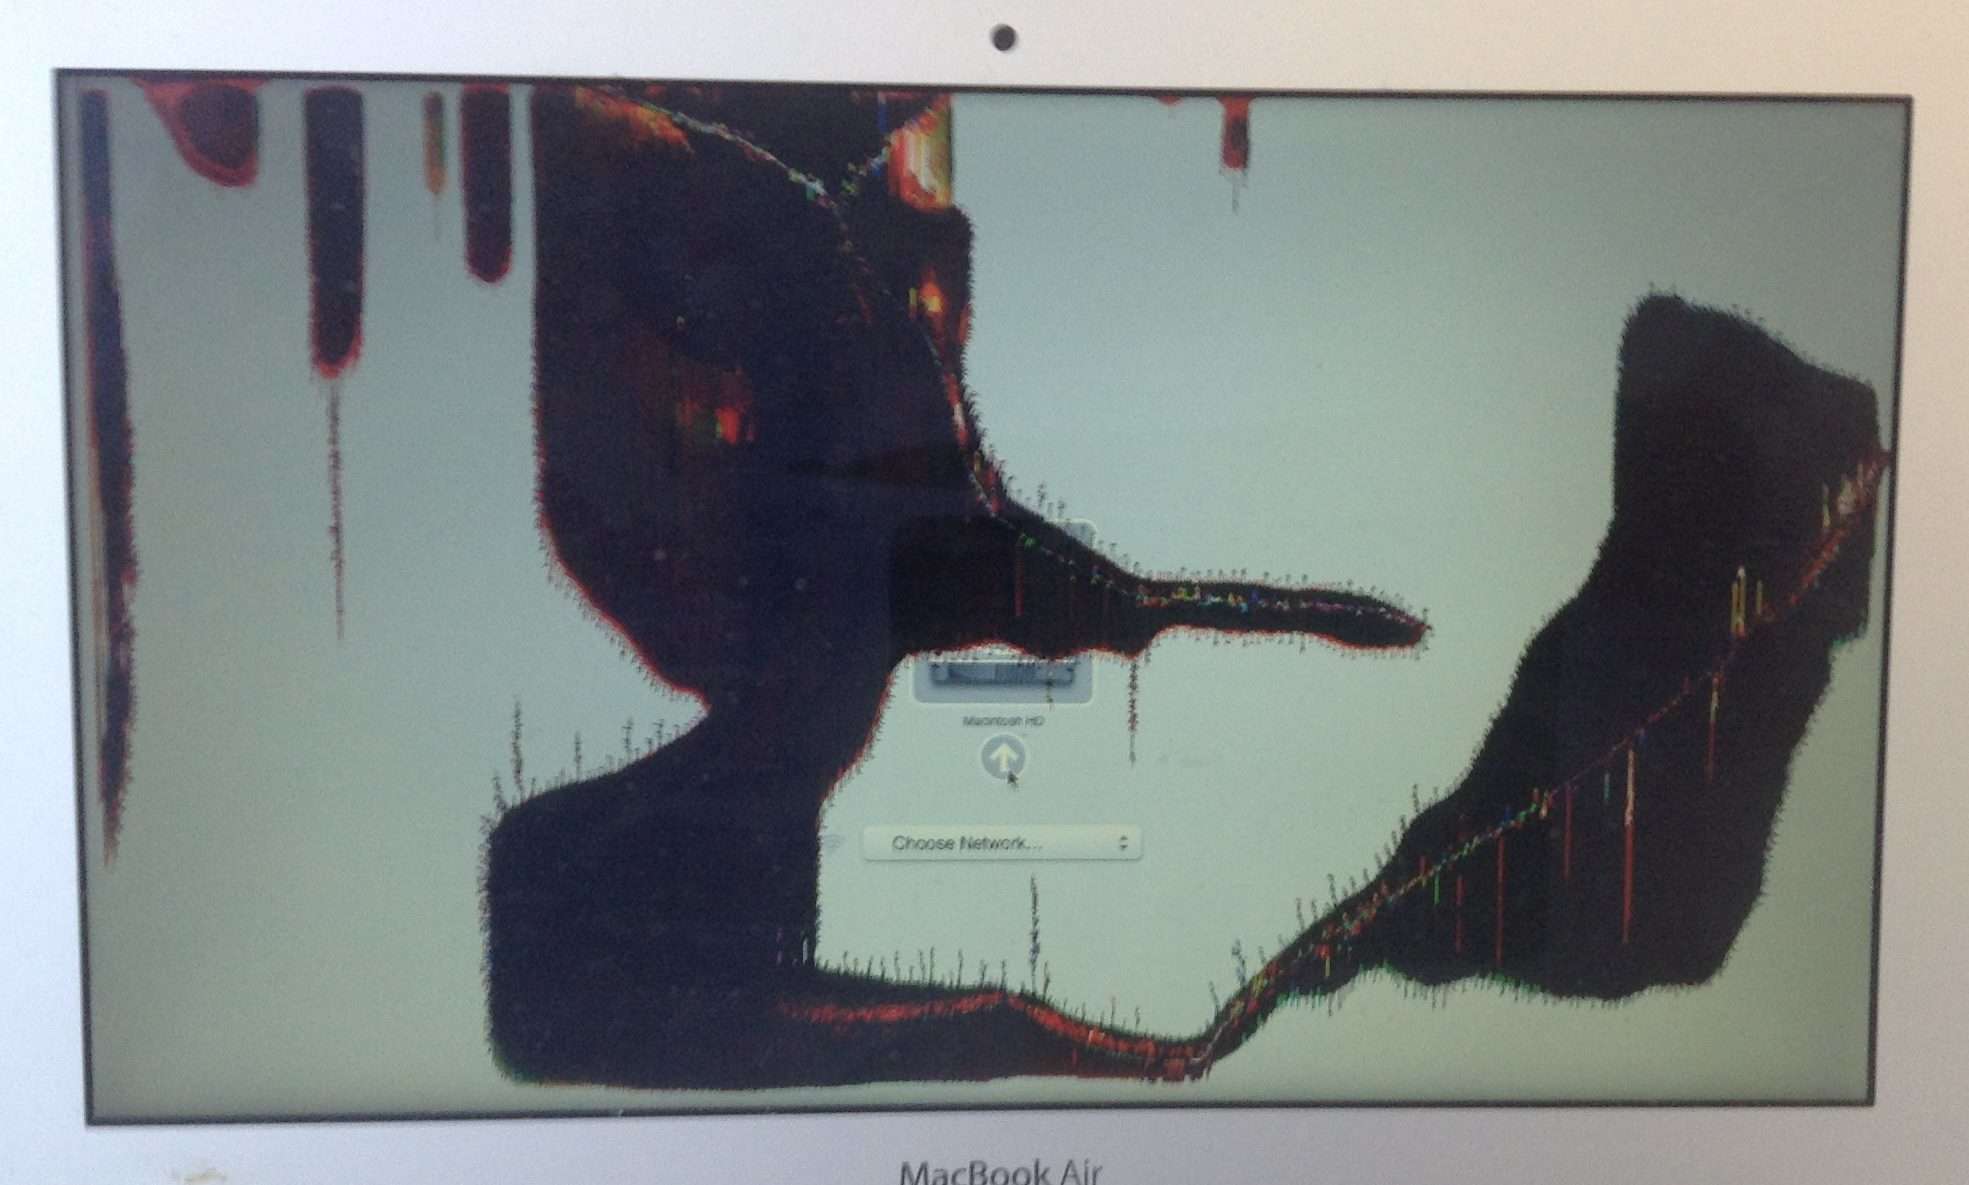 MacBook Air Broken LCD